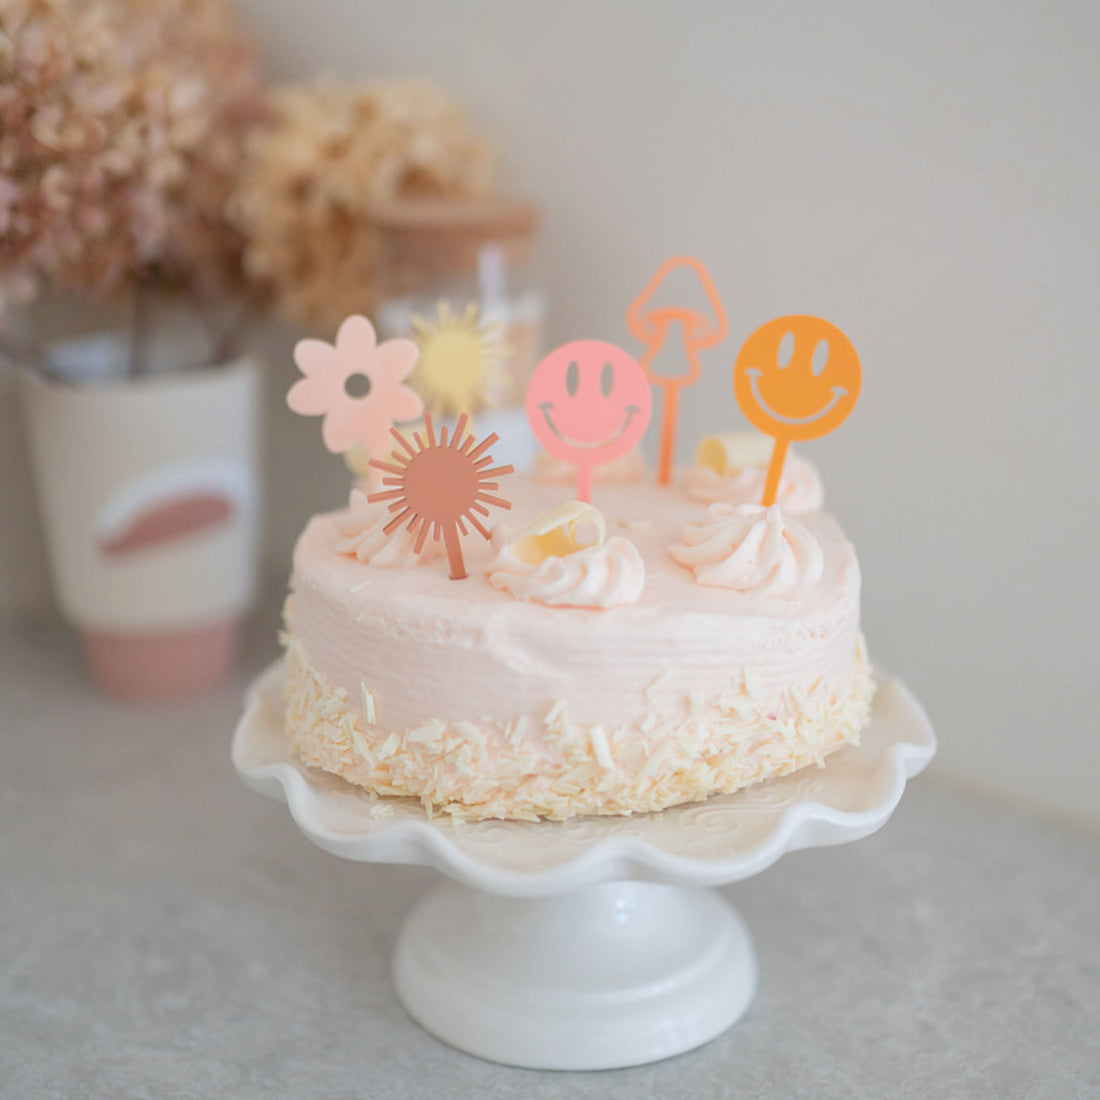 Smile Face Emoji - Edible Cake Topper OR Cupcake Topper, Decor – Edible  Prints On Cake (EPoC)